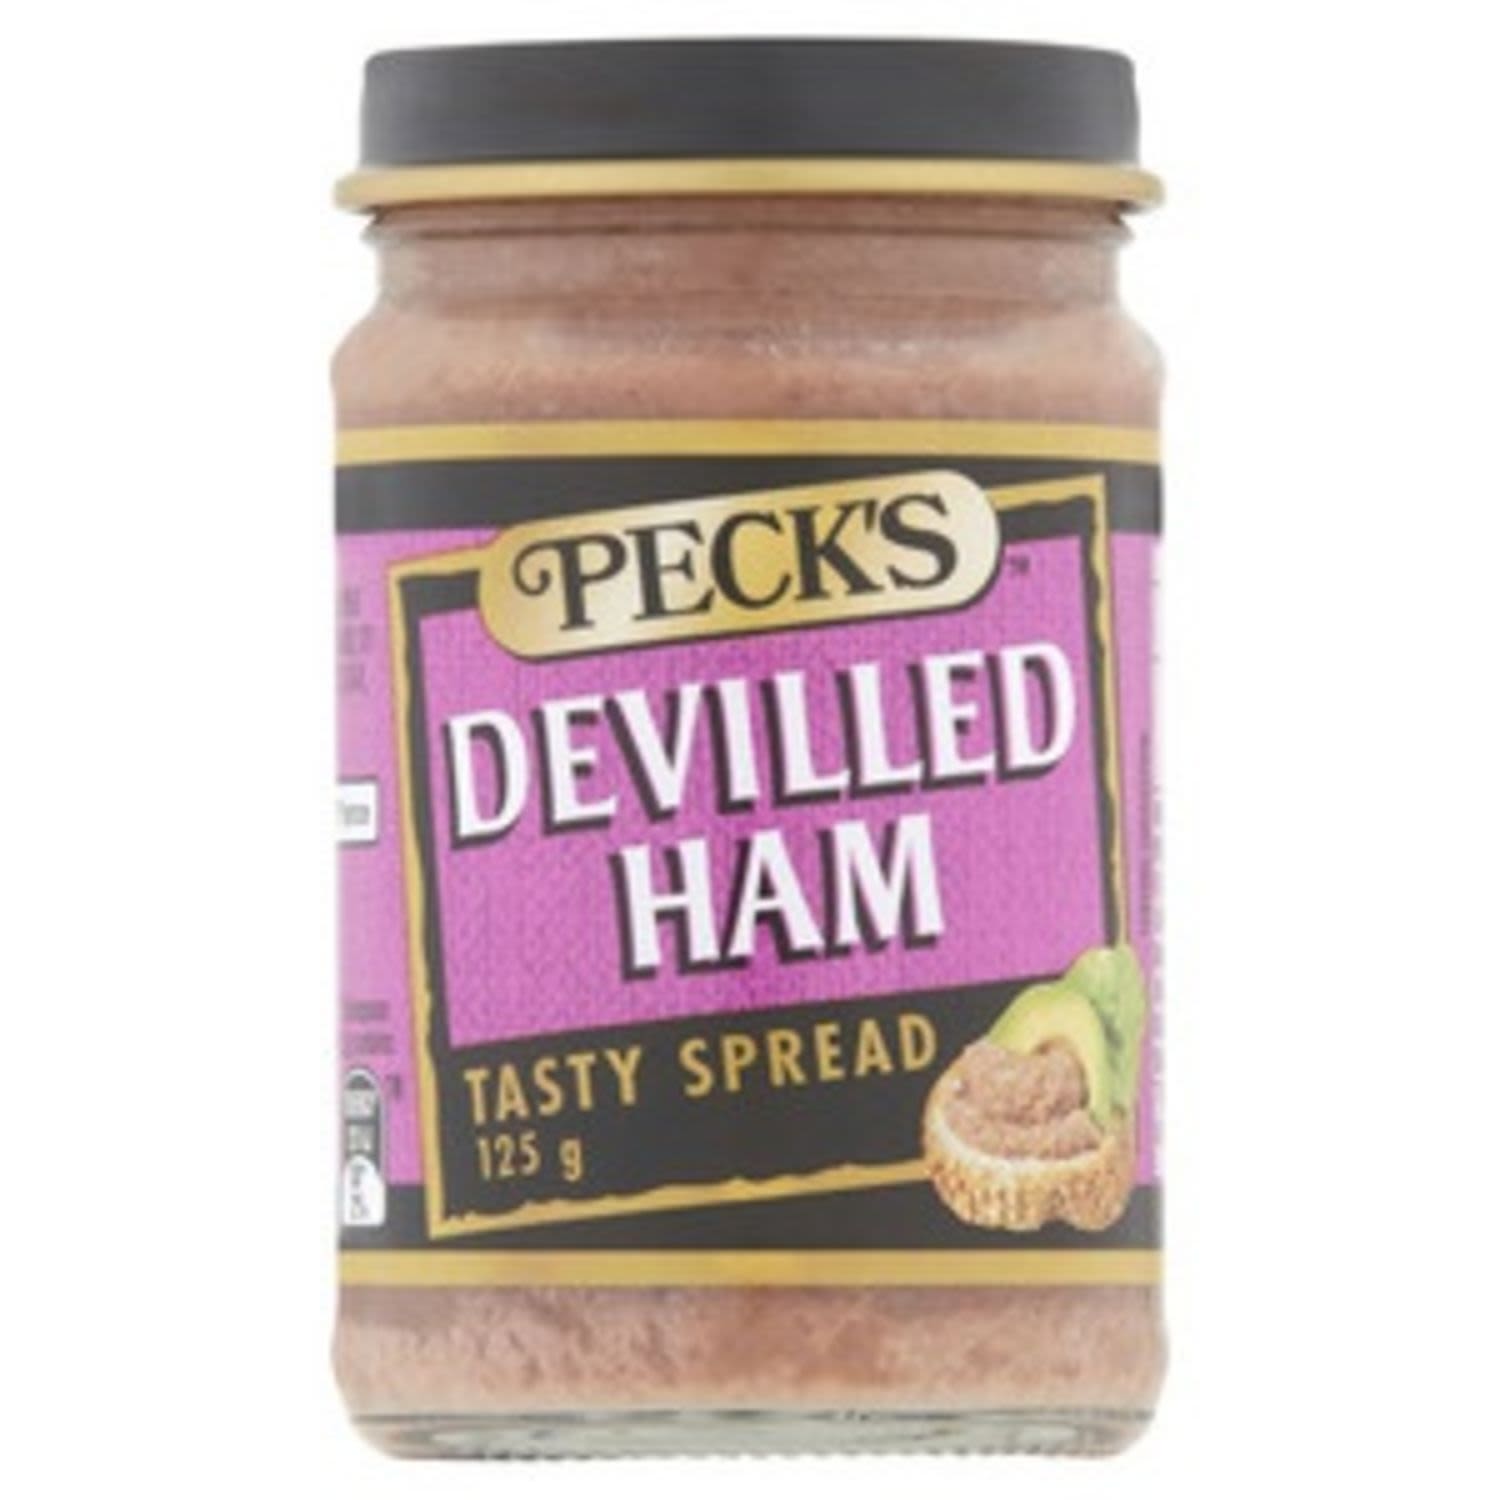 Peck's Devilled Ham Spread, 125 Gram